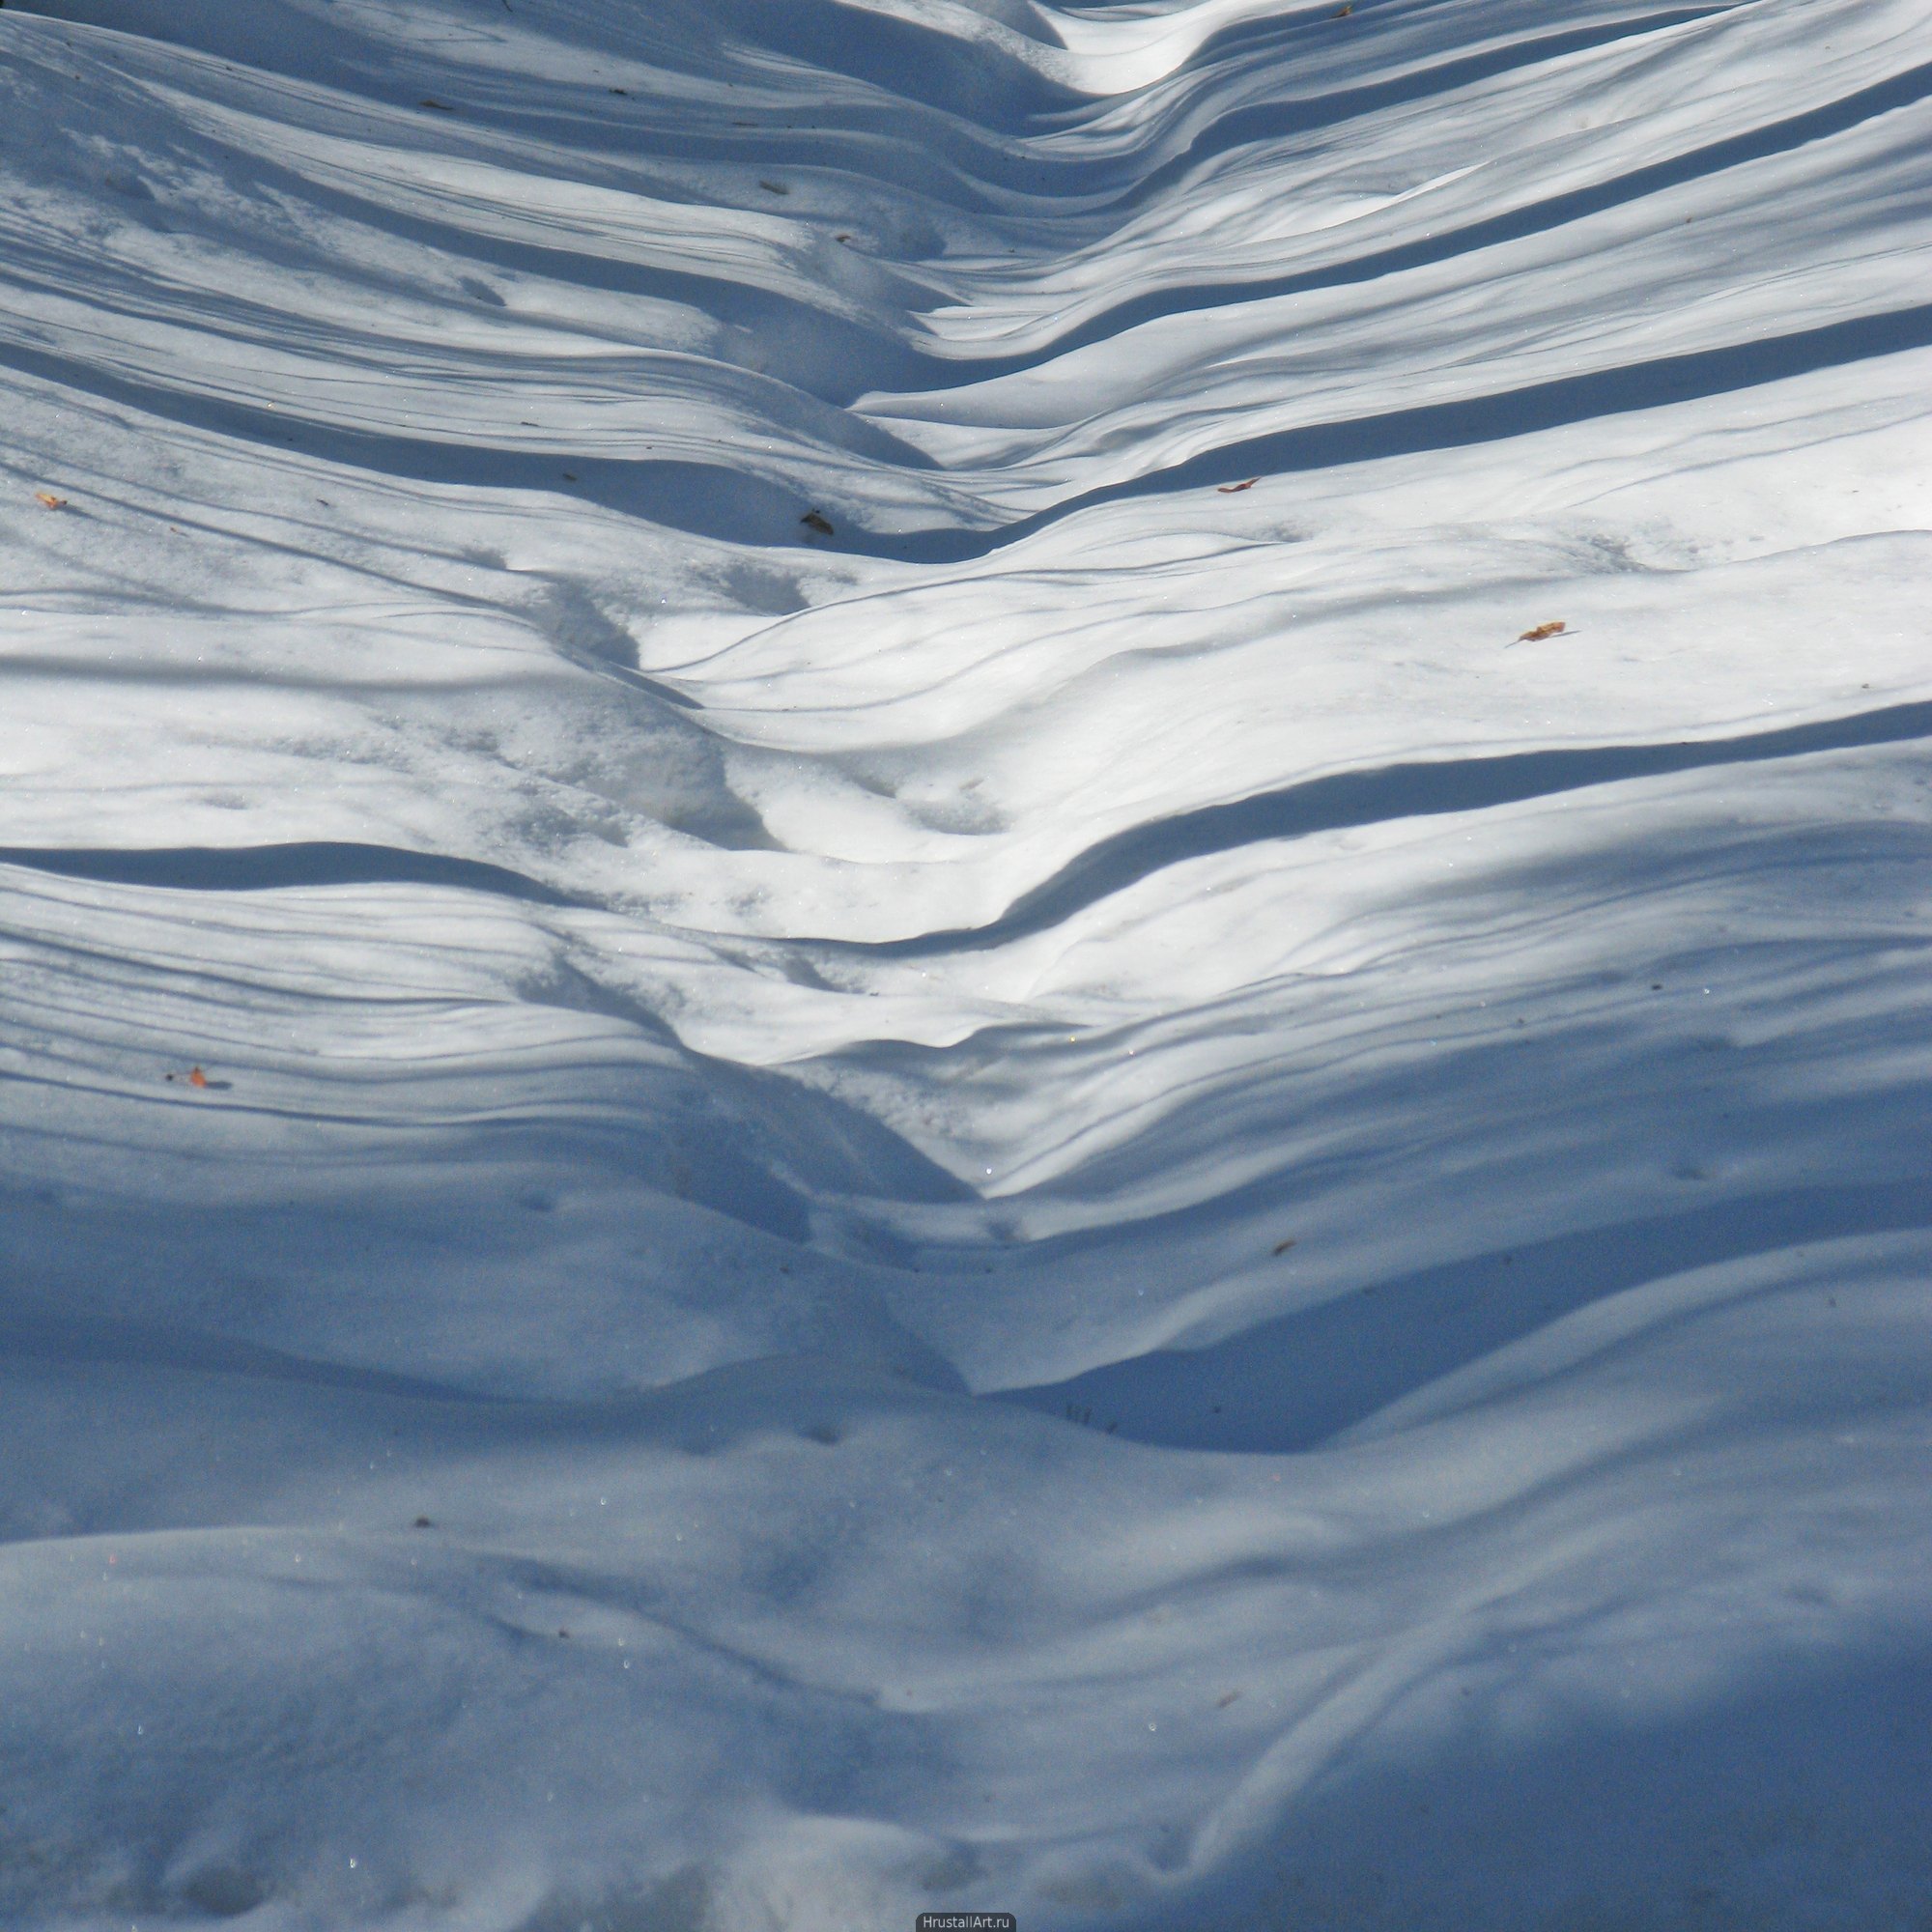 Матроска теней на снегу. Абстрактное фото.